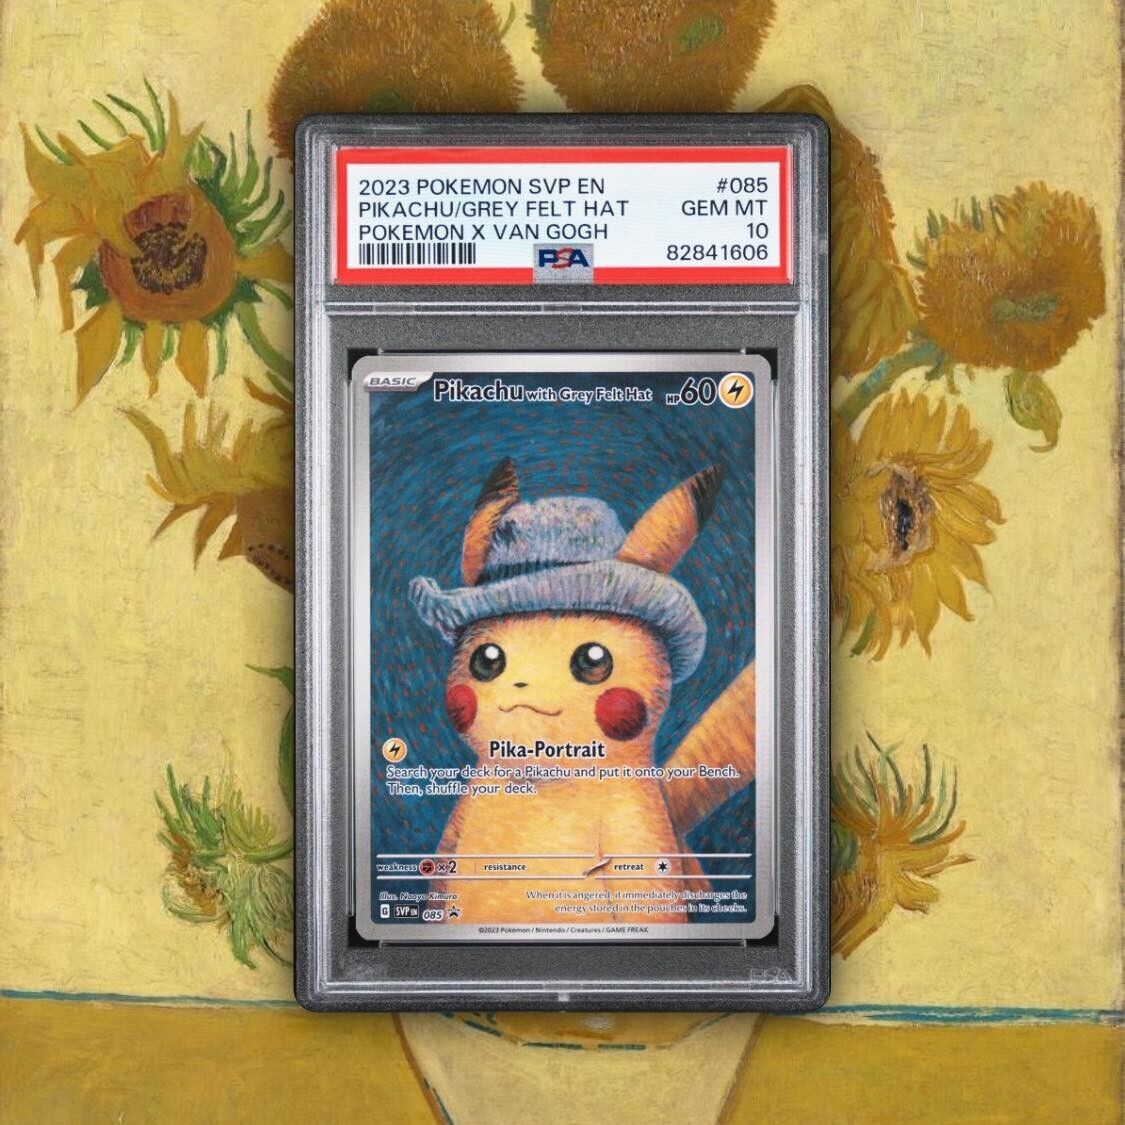 PSA 10 Pokemon X Van Gogh PROMO Card Pikachu With Grey Felt Hat 085 GEM MINT 